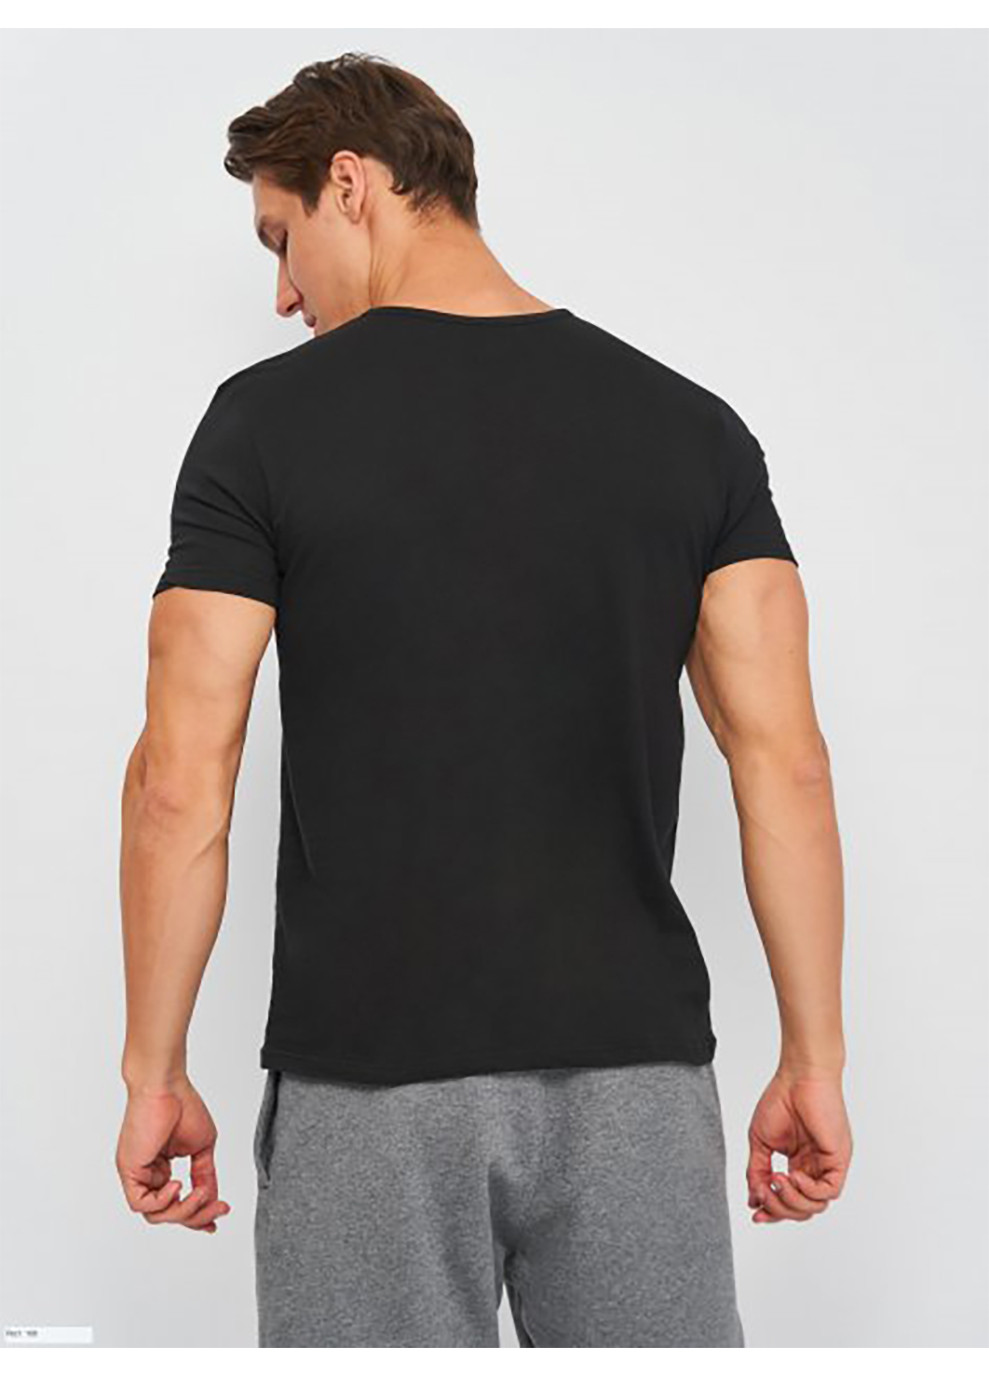 Черная футболка t-shirt mezza manica scollo v черный 2xl муж k1315 nero-2xl Kappa